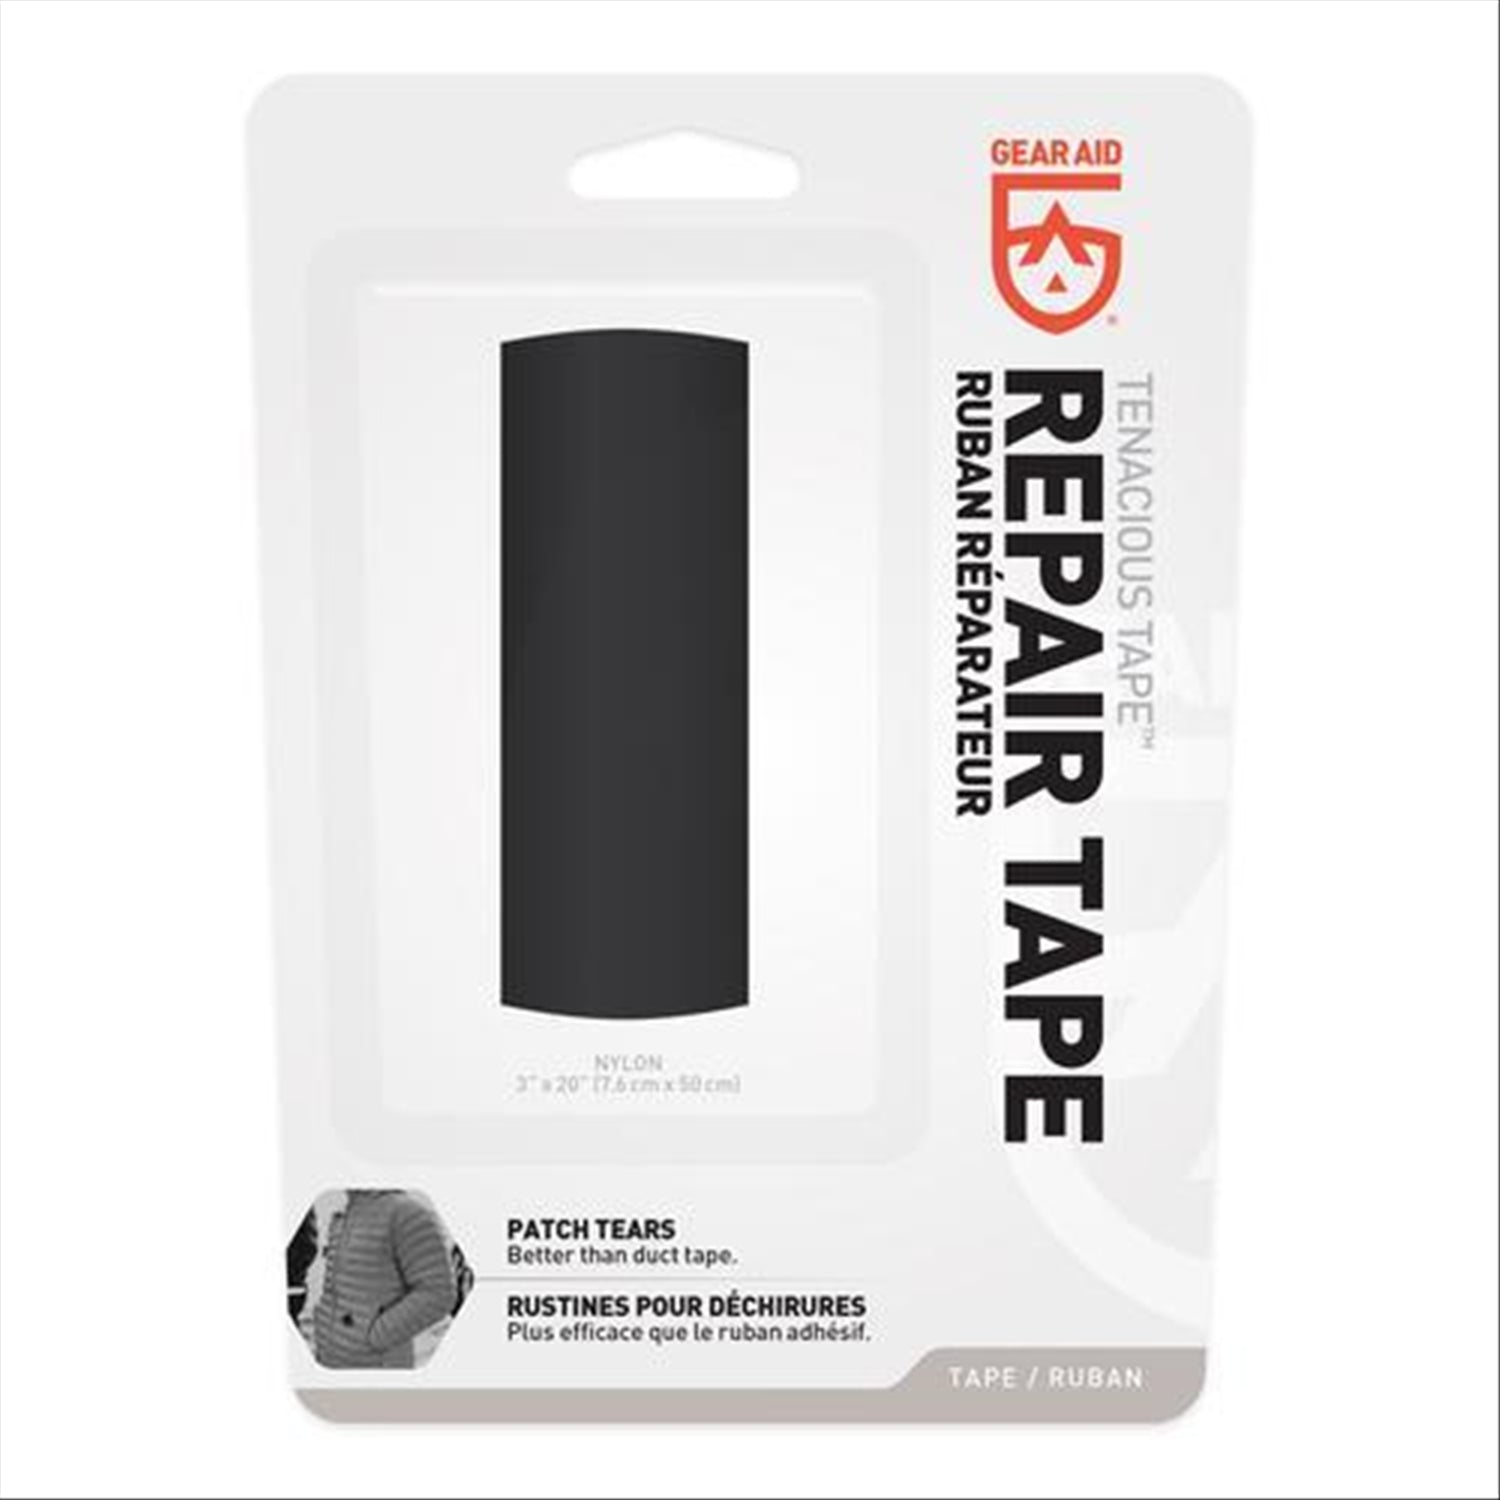 Gear Aid Gear Aid Tenacious Tape All Purpose Fabric Repair